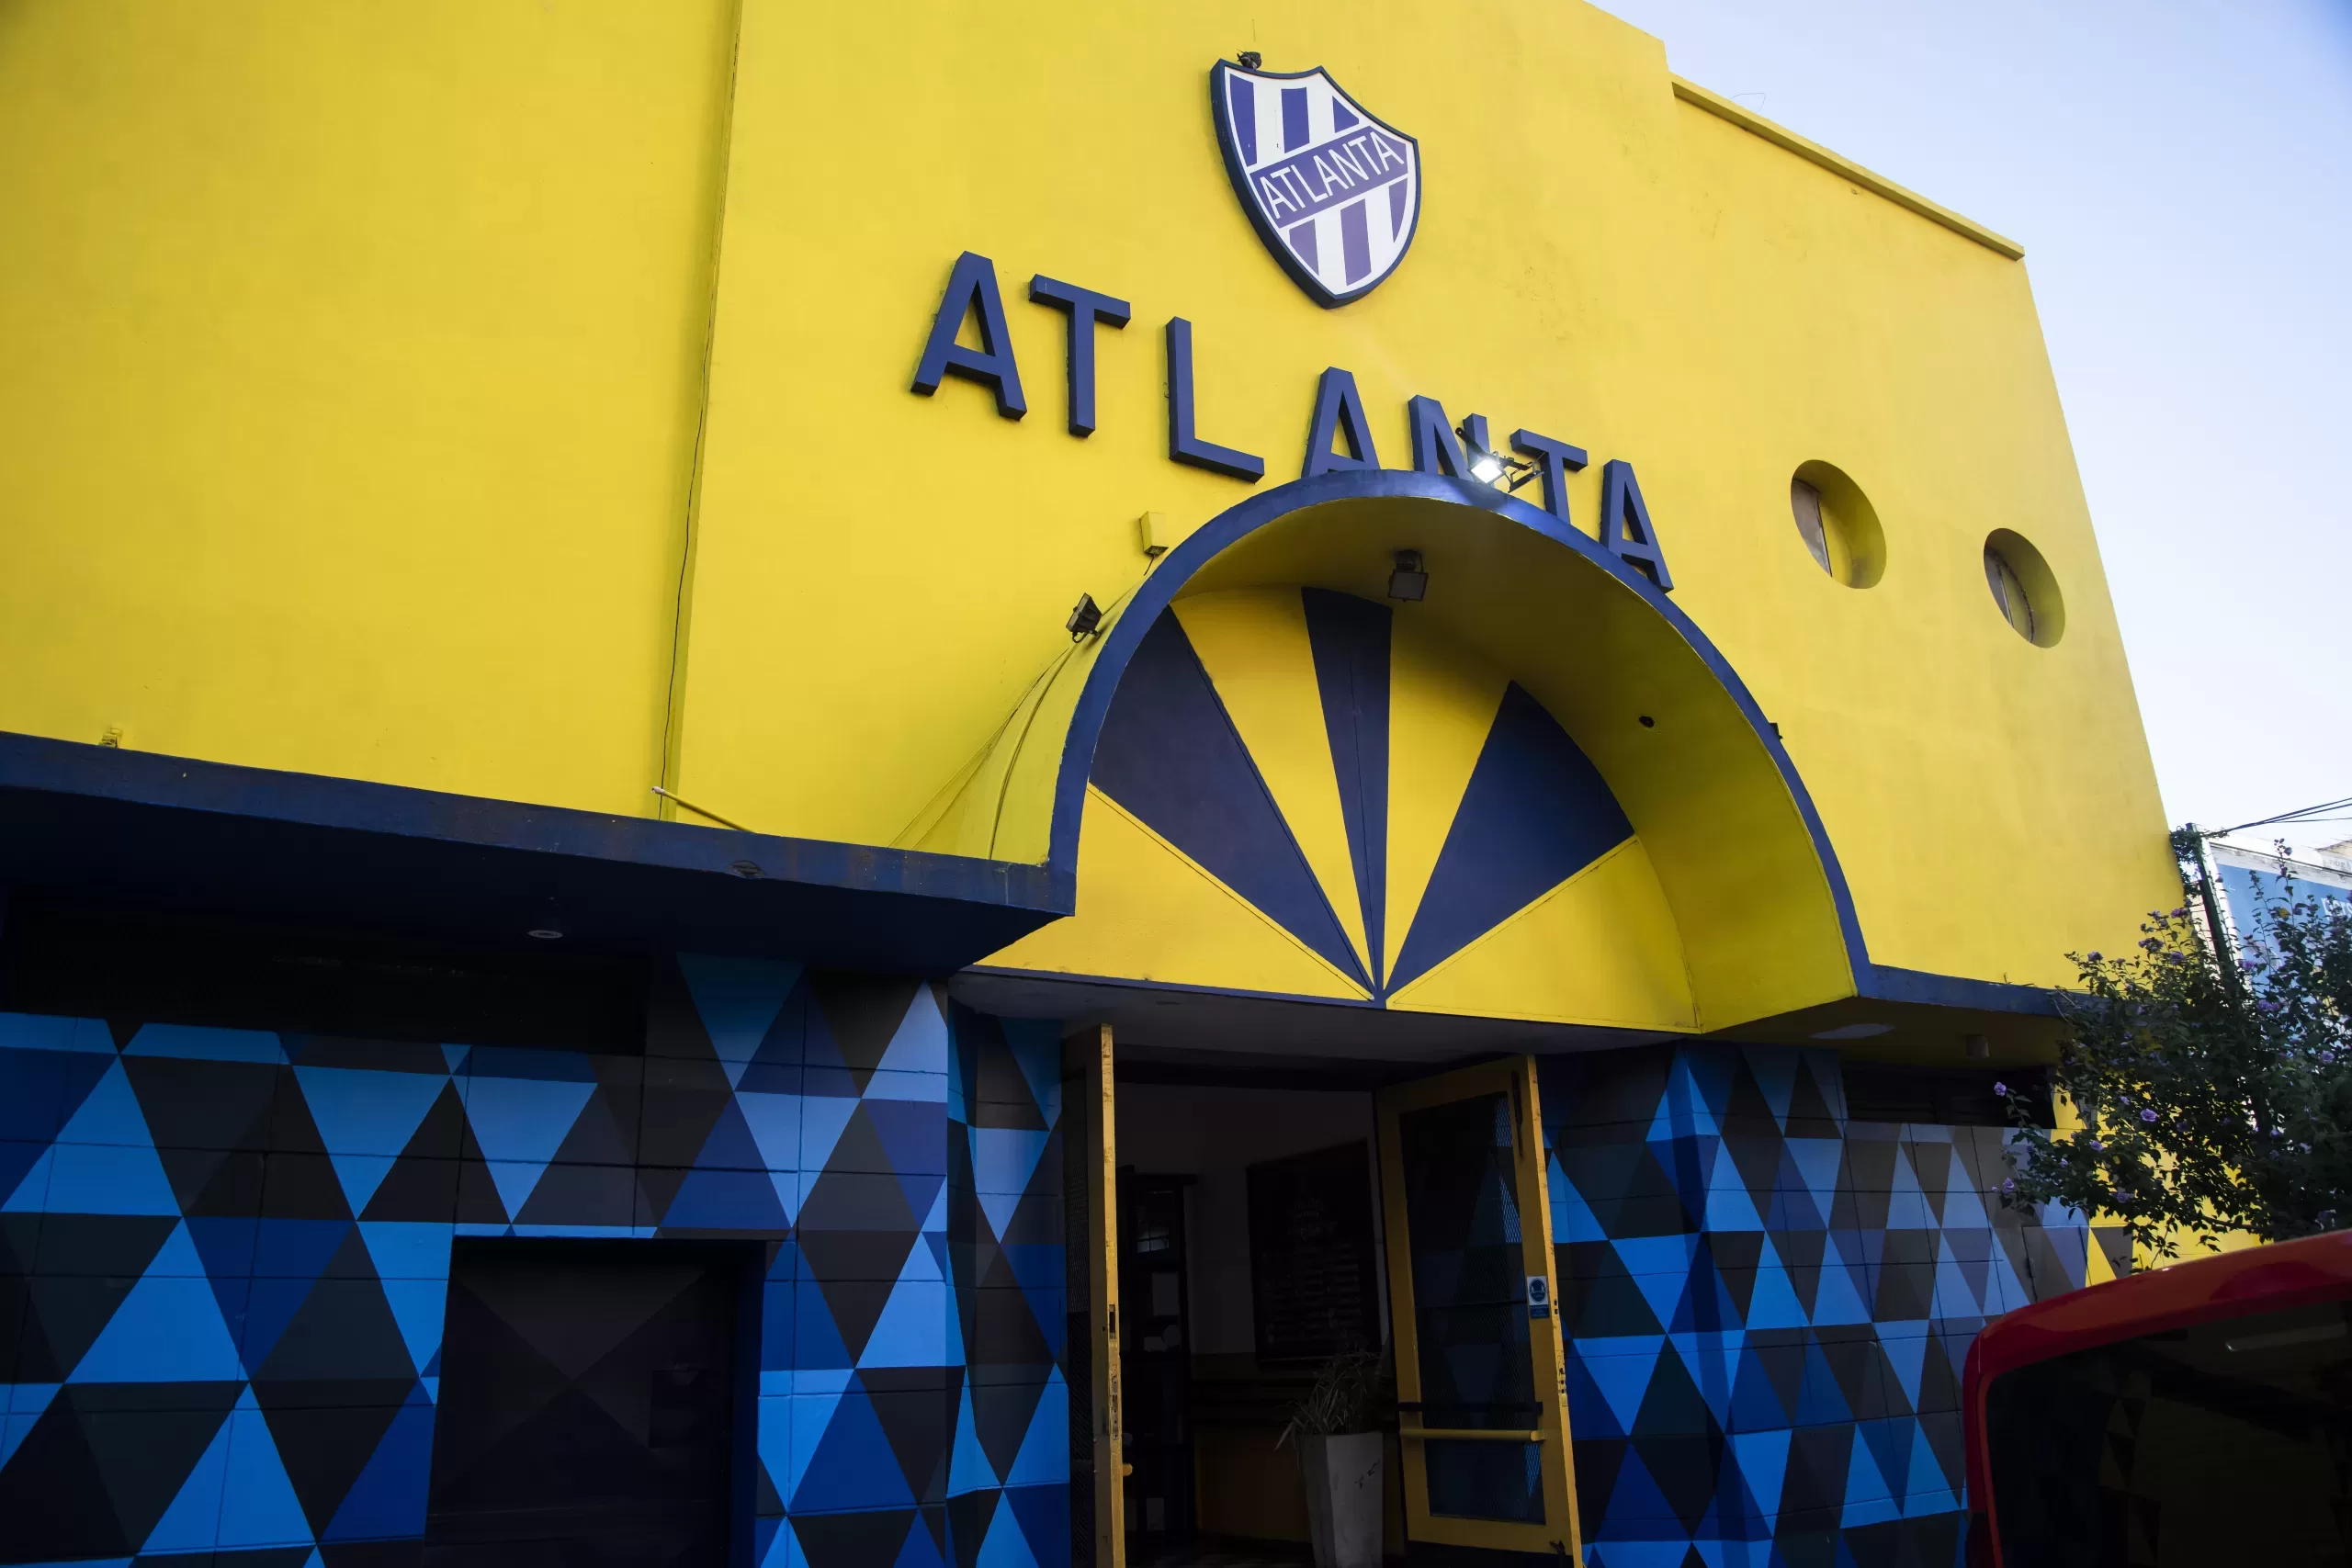 Stream Marcha Club Atletico Atlanta by clubatlanta